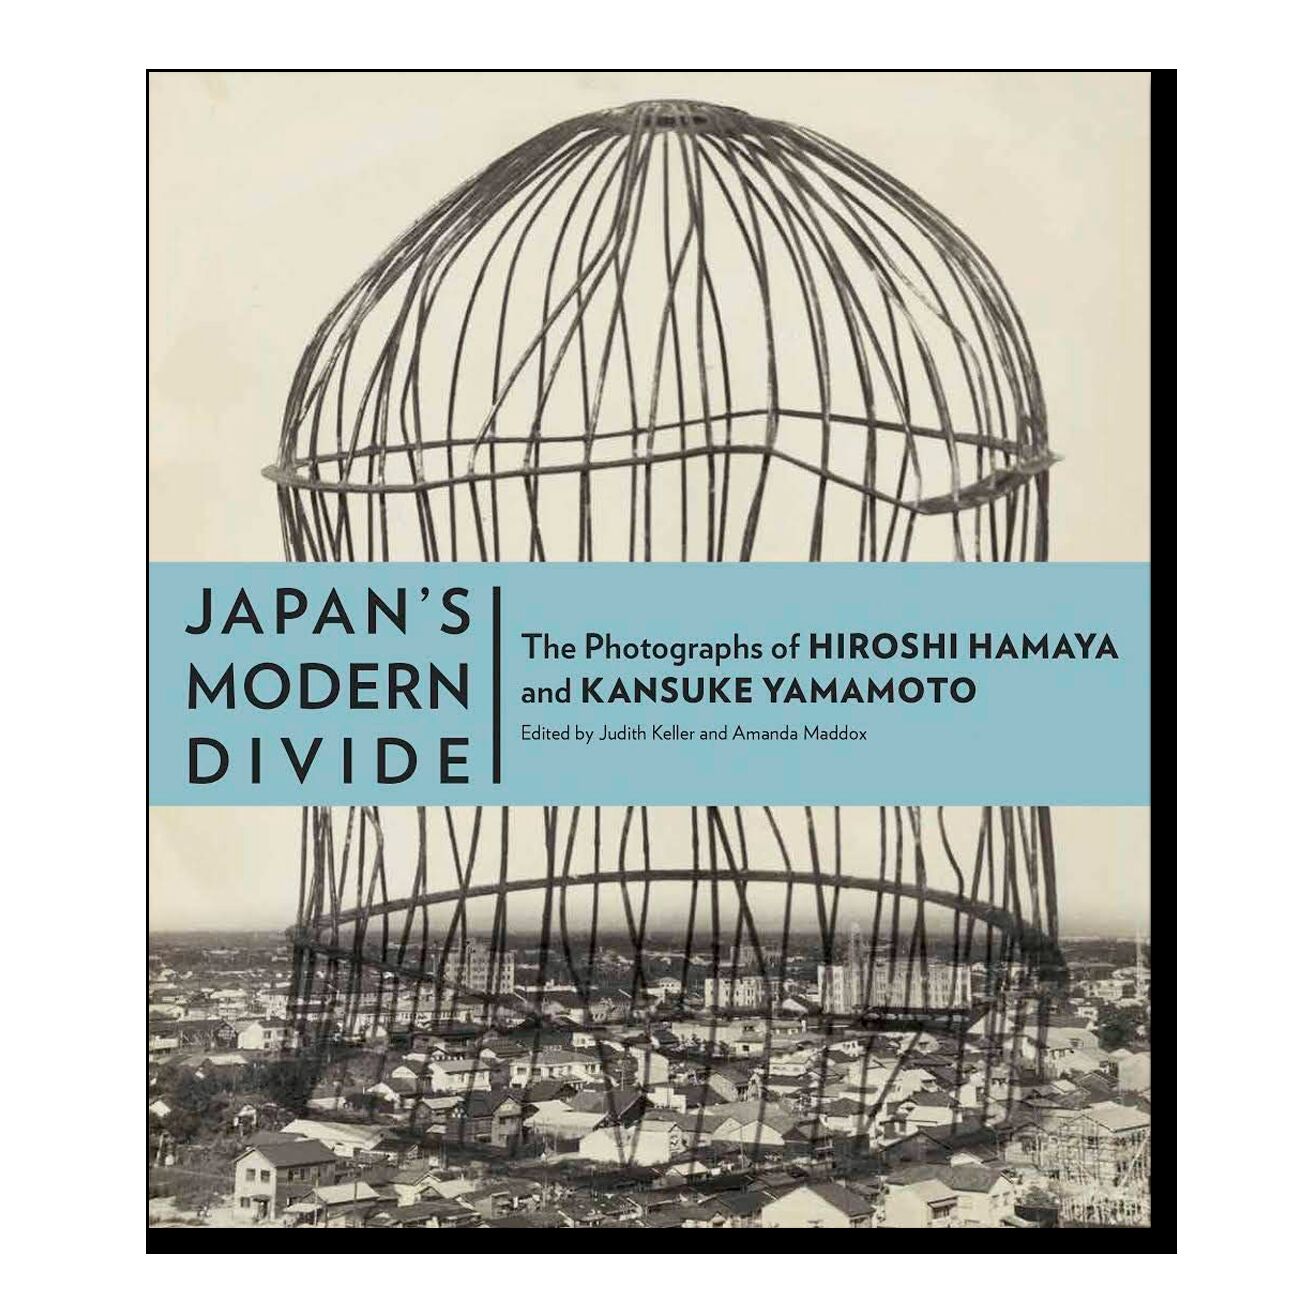 Japan’s Modern Divide: The Photographs of Hiroshi Hamaya and Kansuke Yamamoto